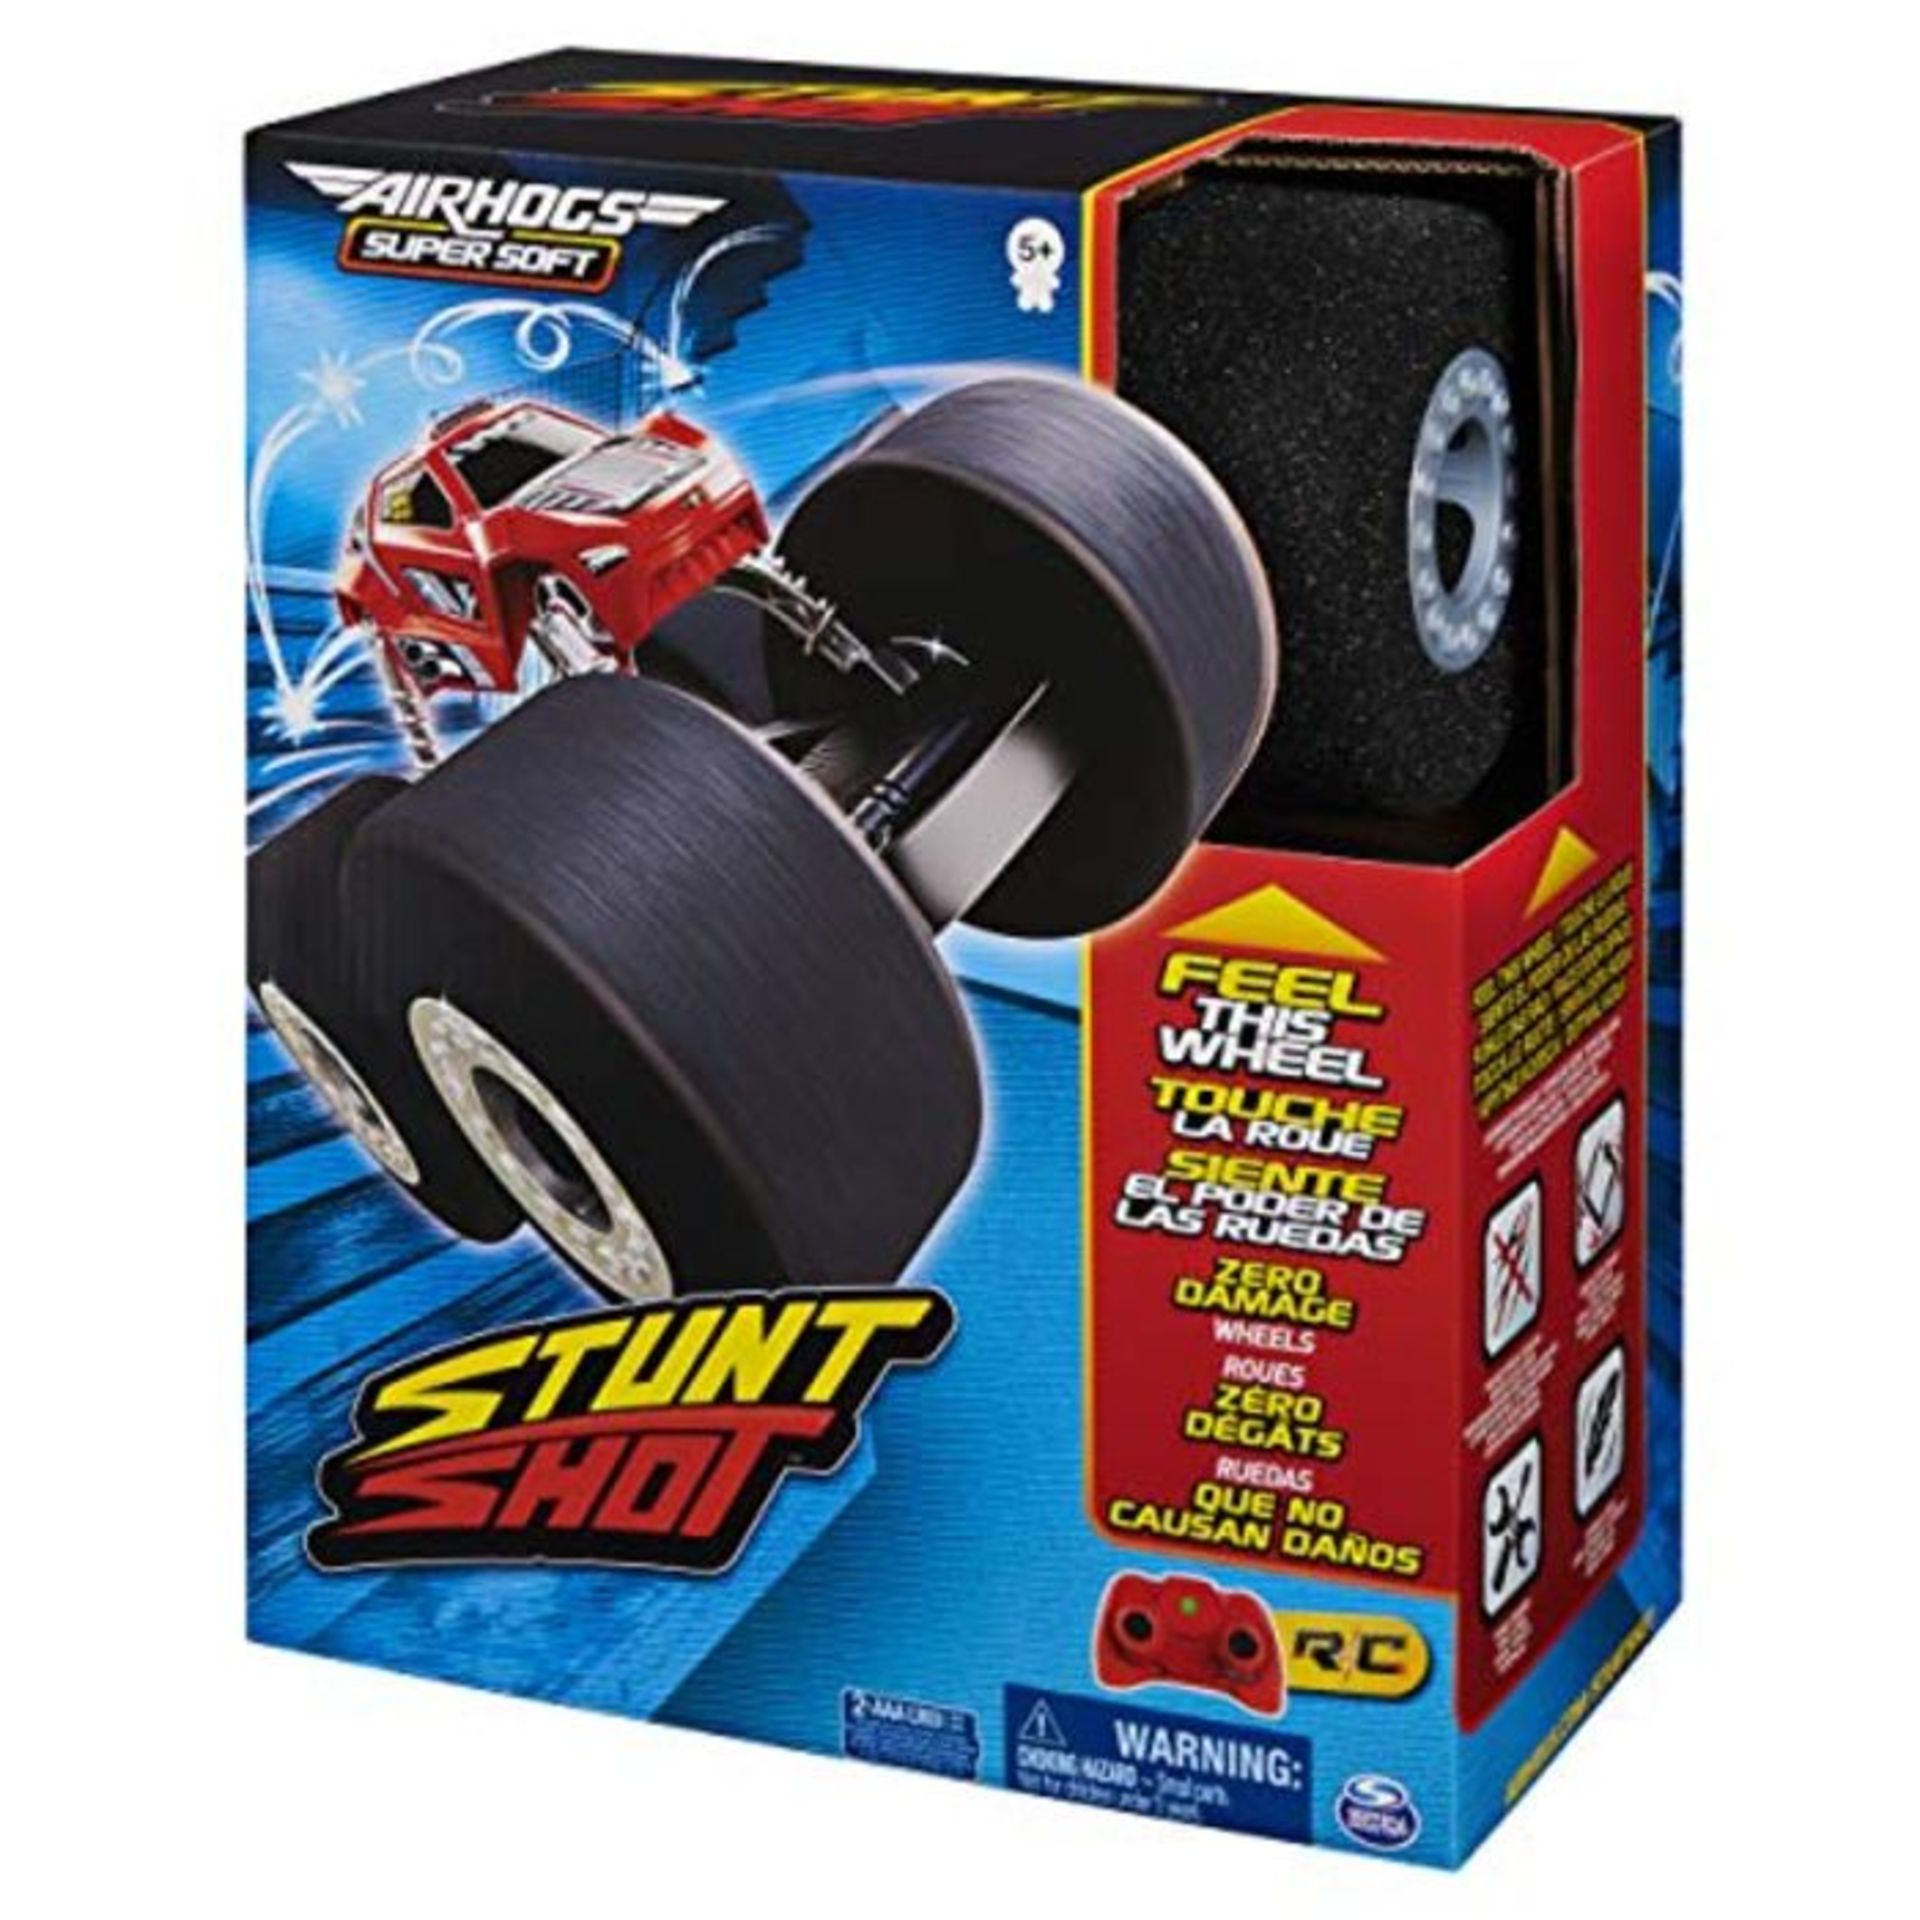 Air Hogs Super Soft, Stunt Shot Indoor Remote Control Stunt Vehicle with Soft Wheels,